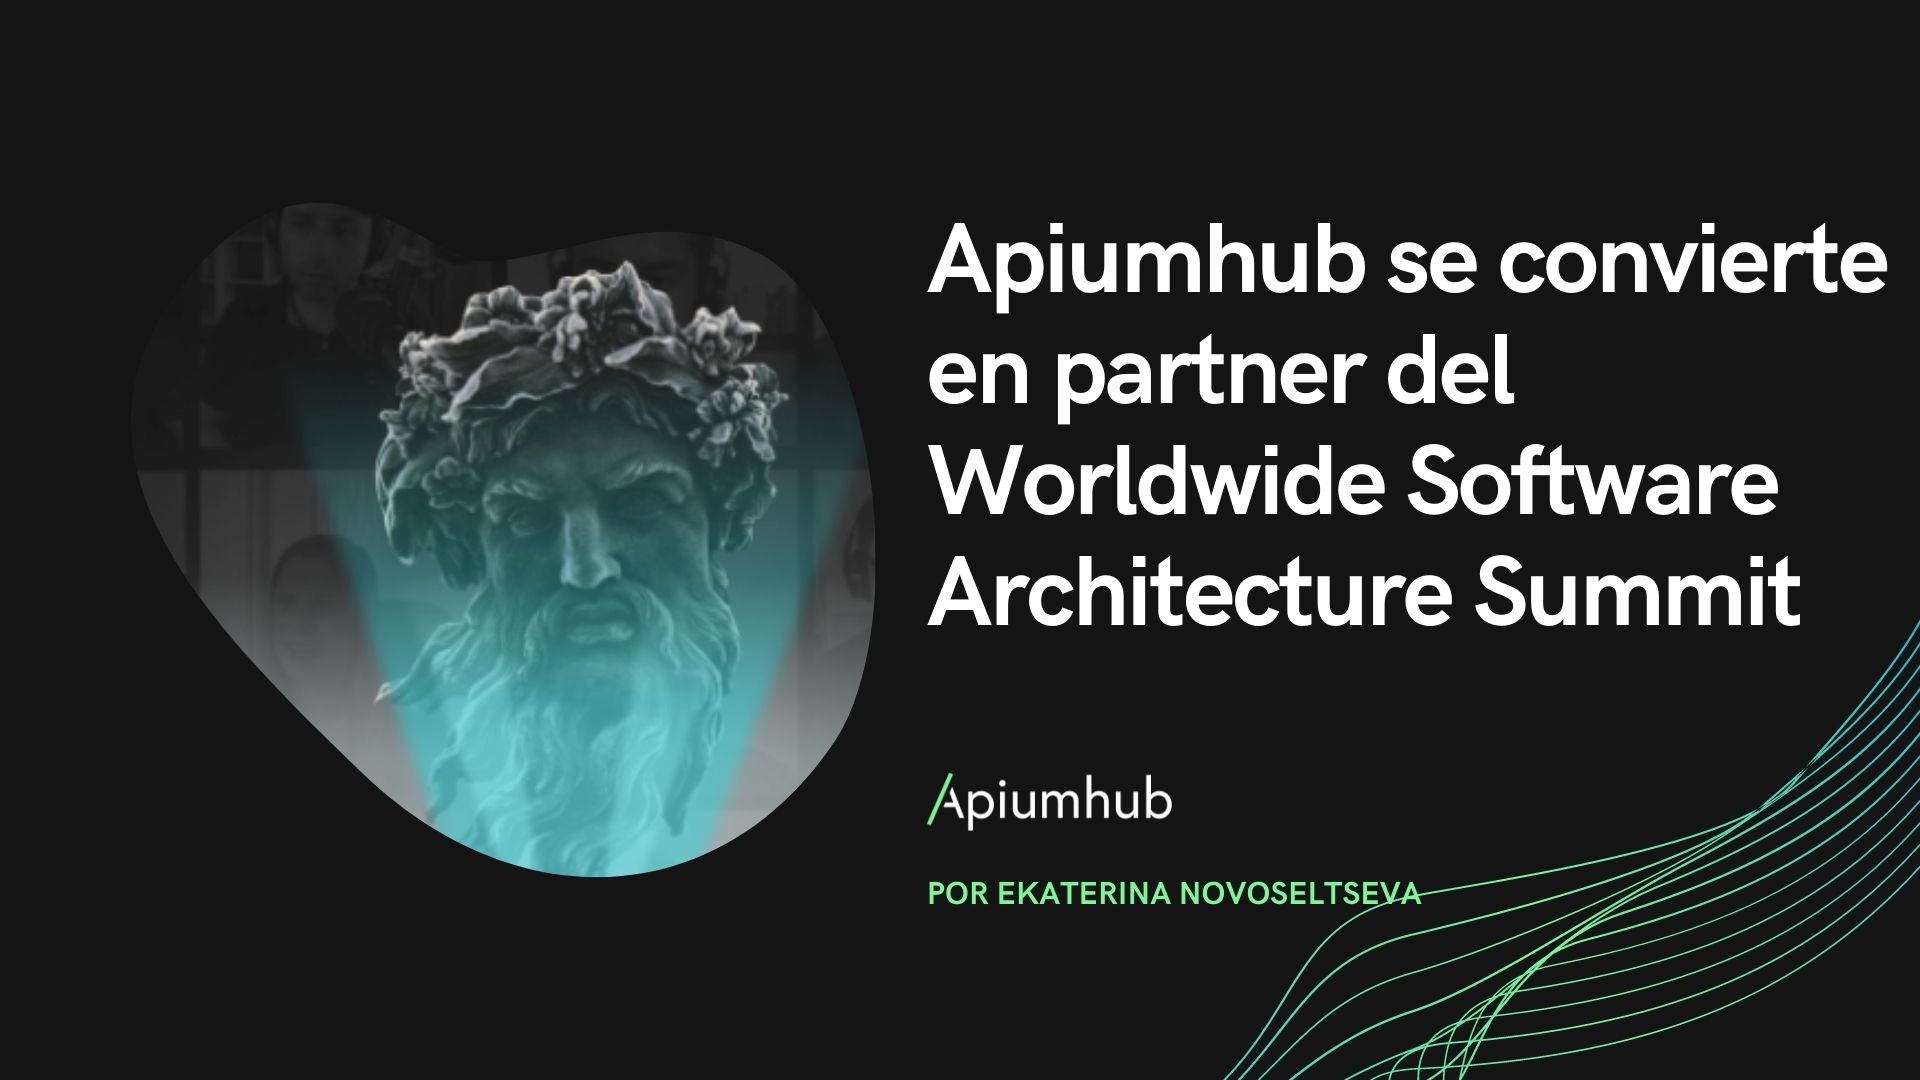 Apiumhub se convierte en partner del Worldwide Software Architecture Summit